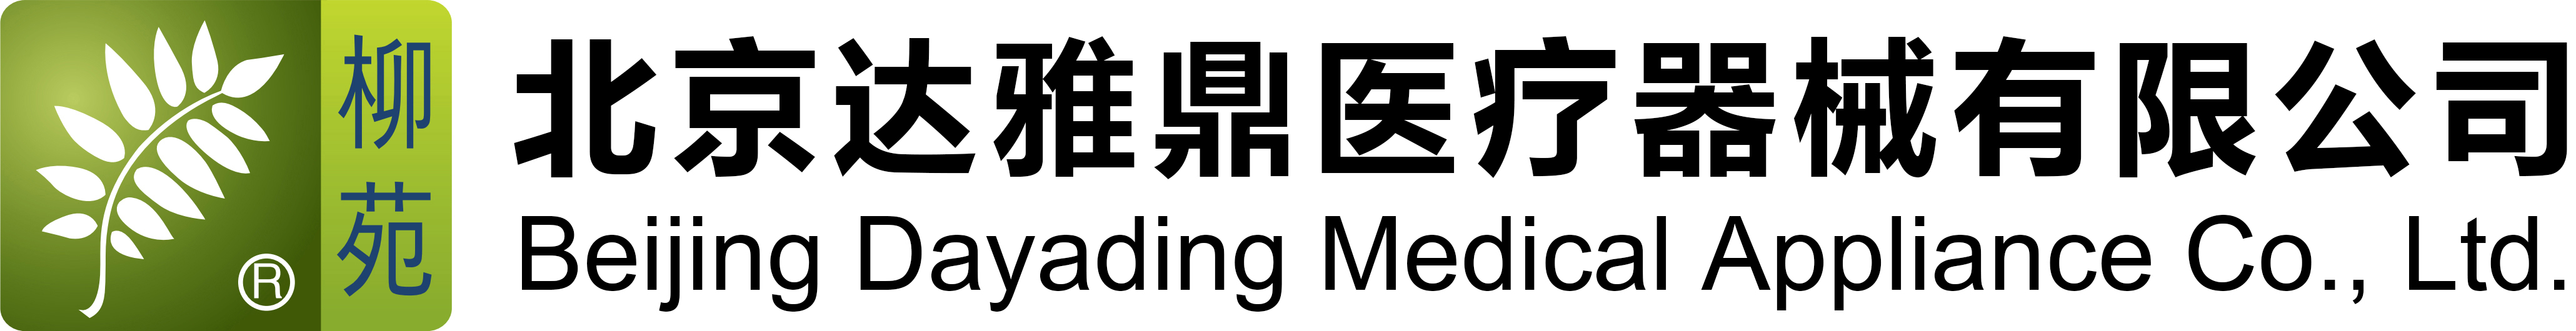 Beijing Dayading Medical Appliance Co., Ltd.